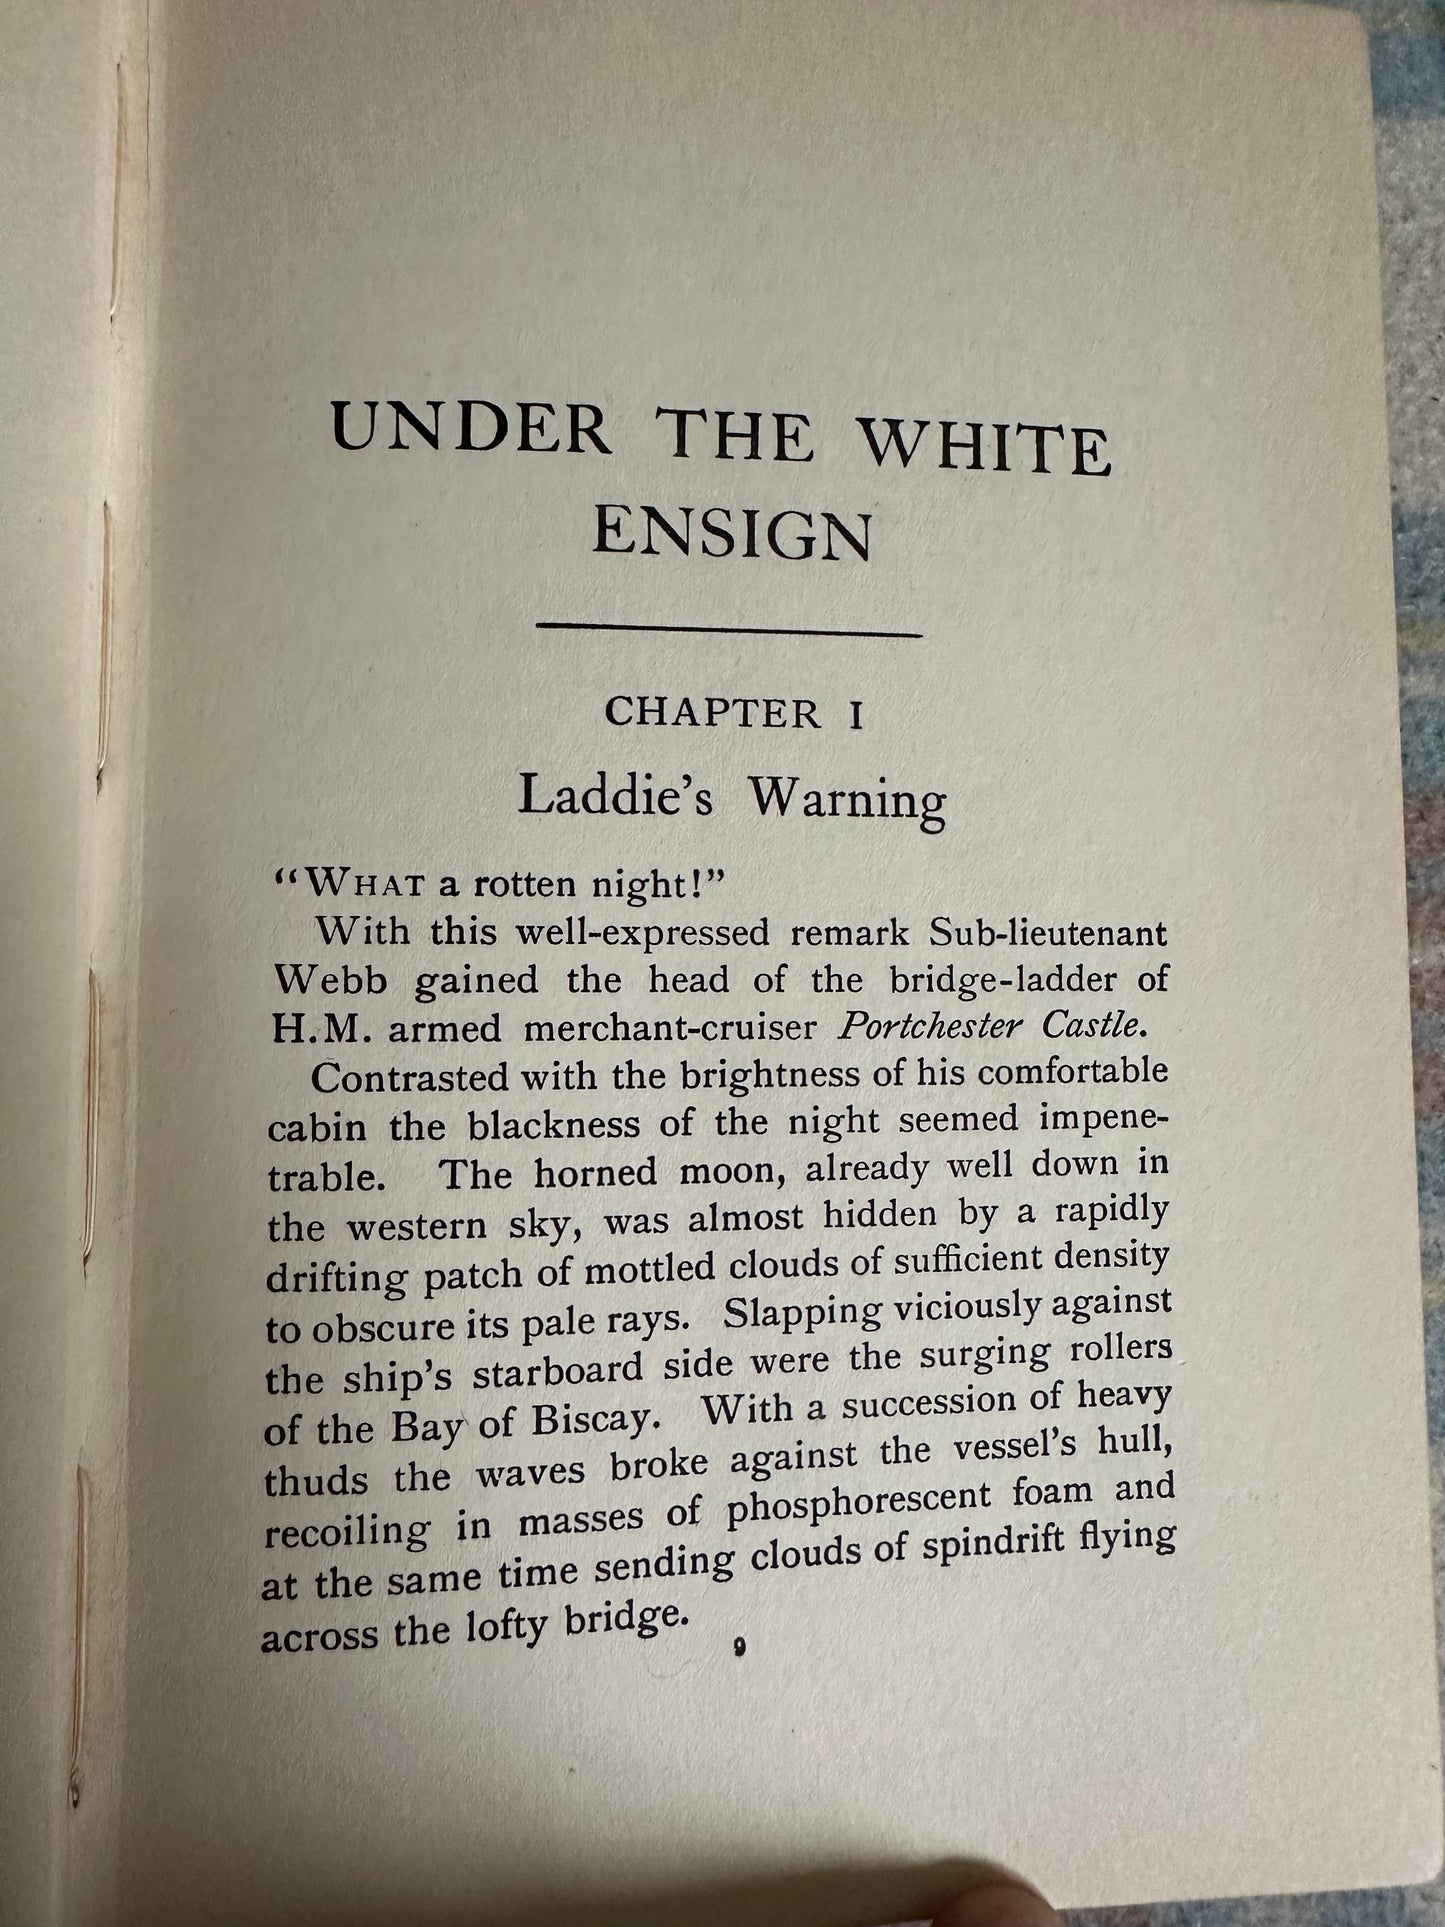 1928 Under The White Ensign - Percy F. Westerman (Illust E. S. Hodgson) Blackie & Son Ltd